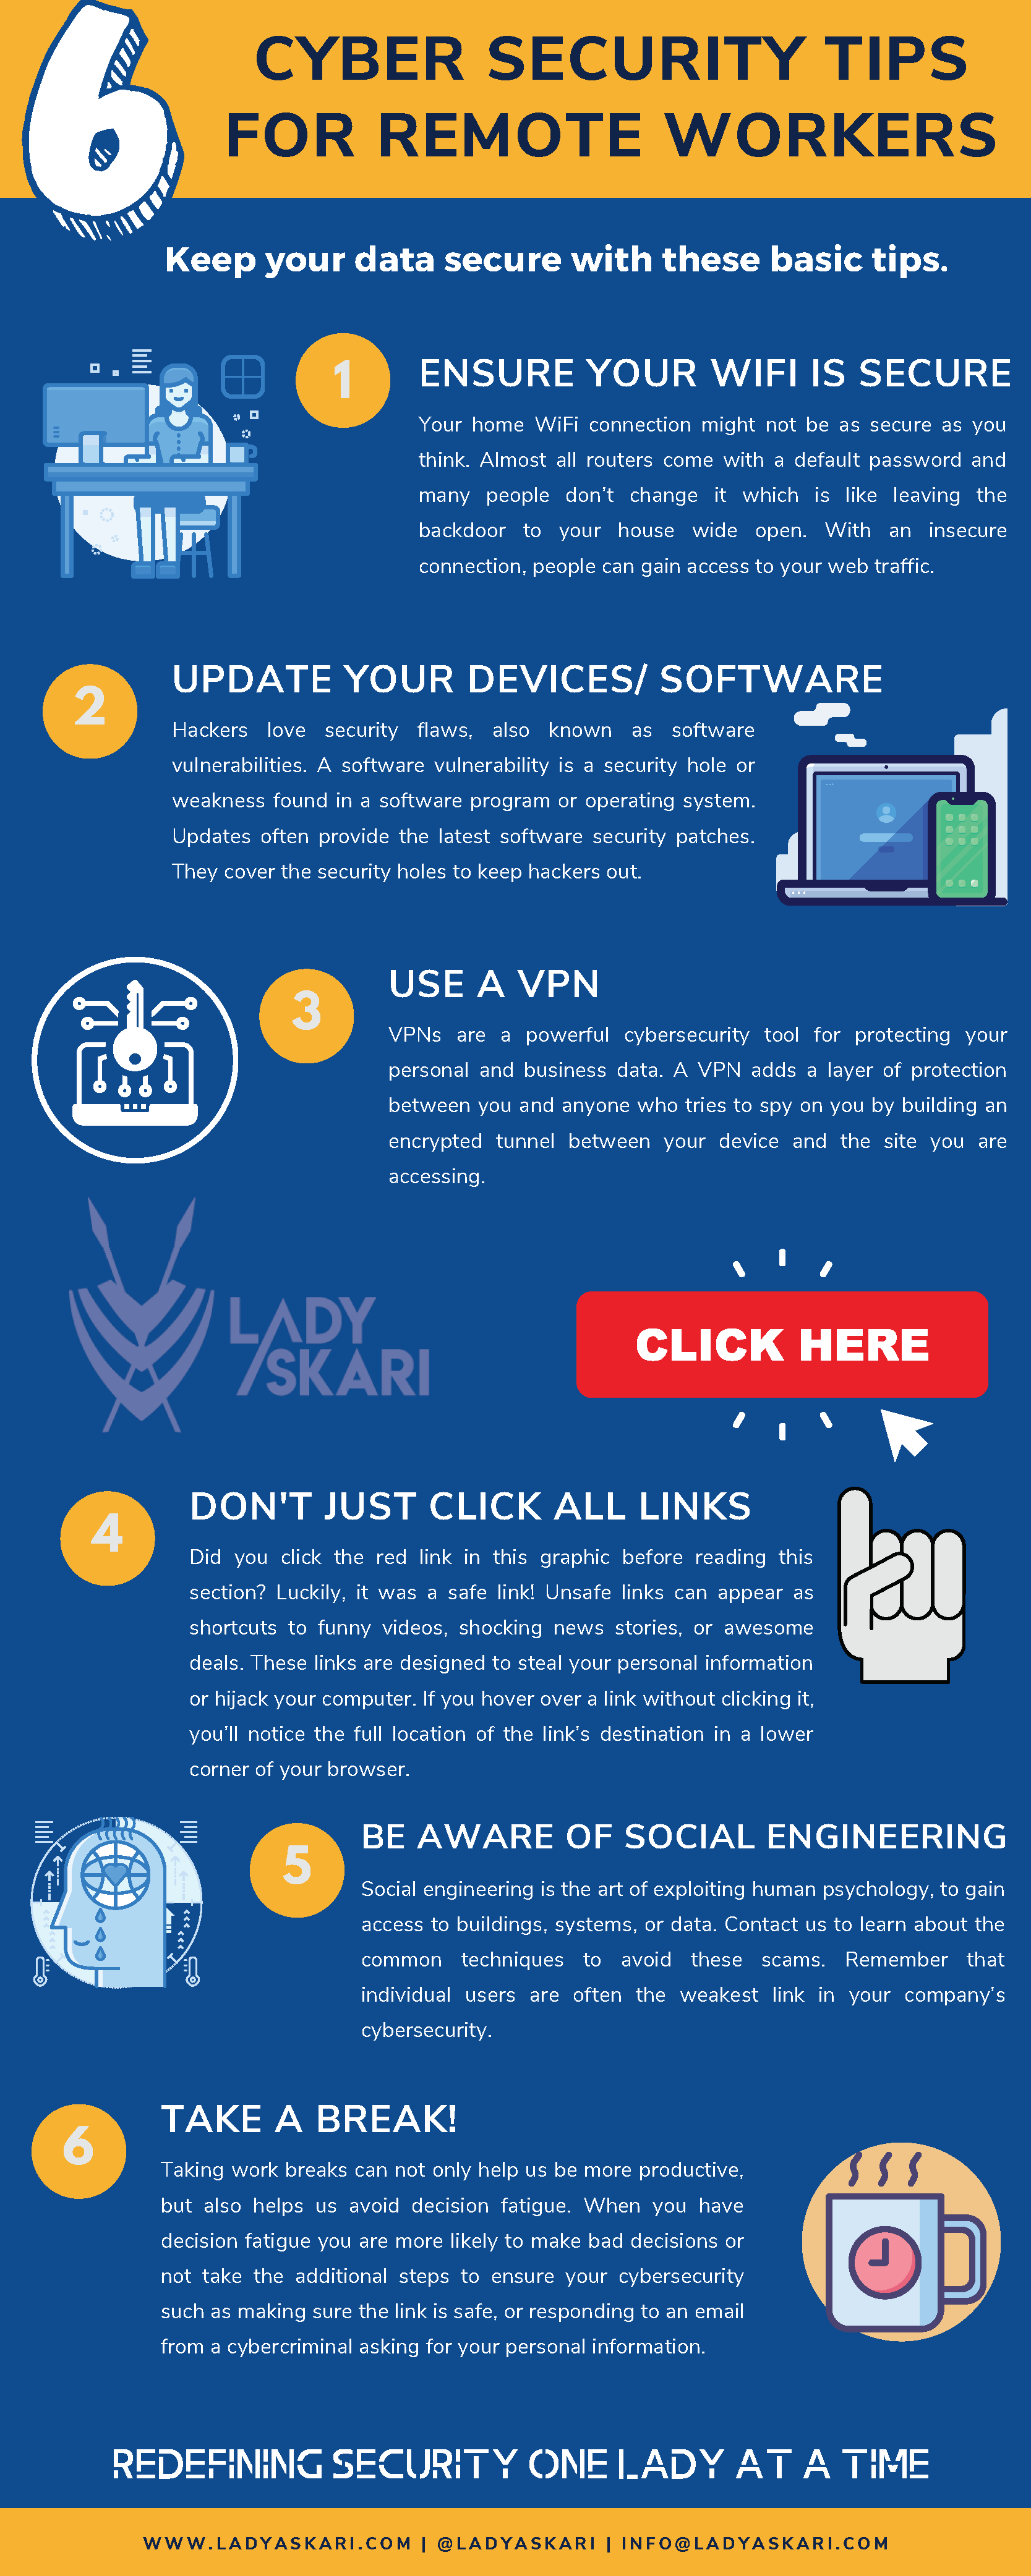 Lady Askari Cybersecurity Tips